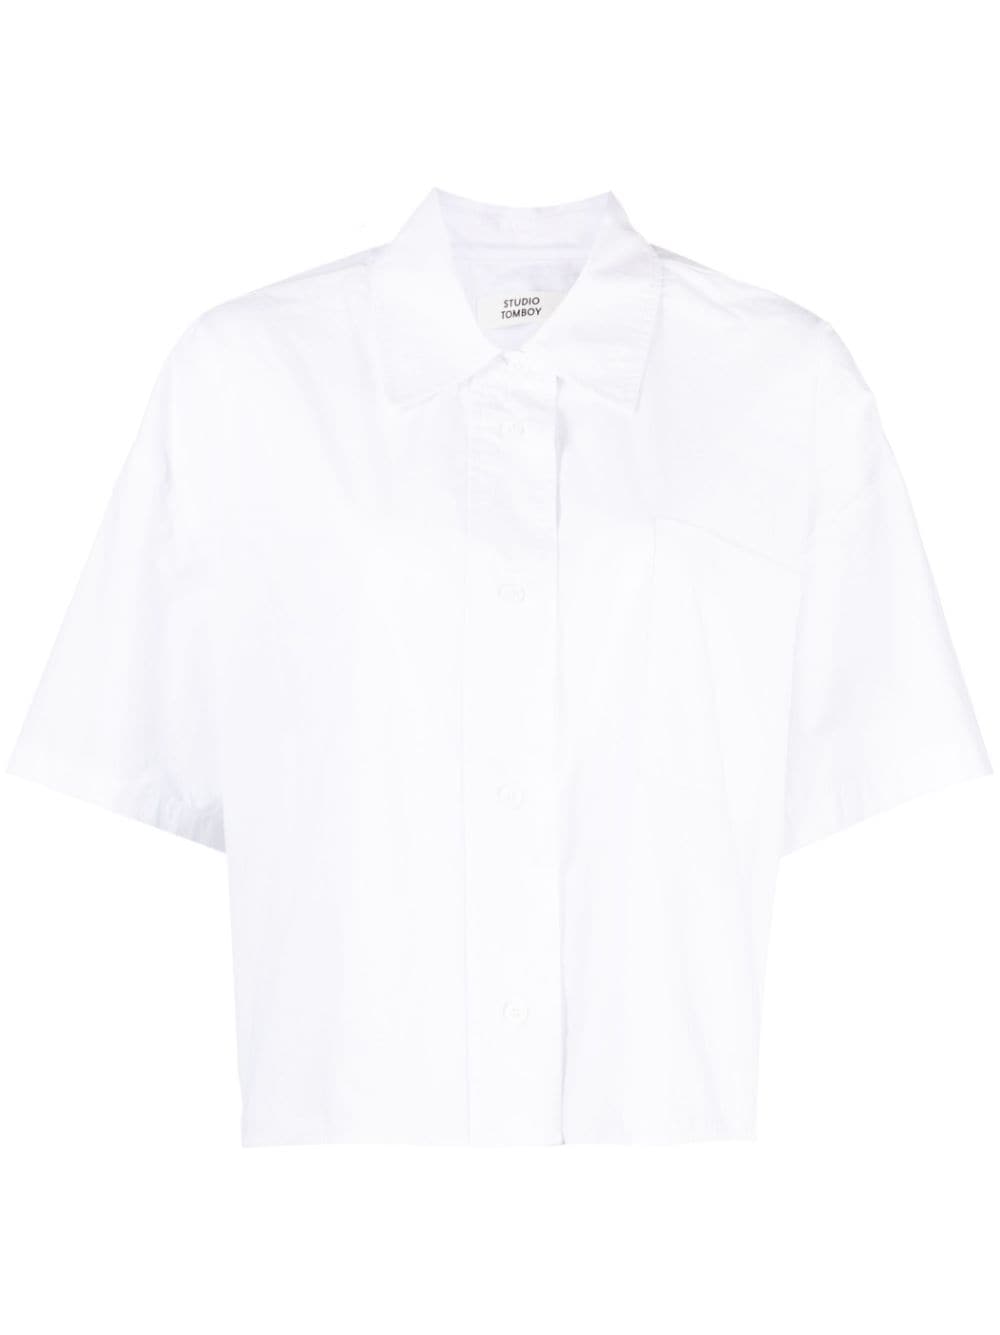 STUDIO TOMBOY patch-pocket Cropped Shirt - Farfetch